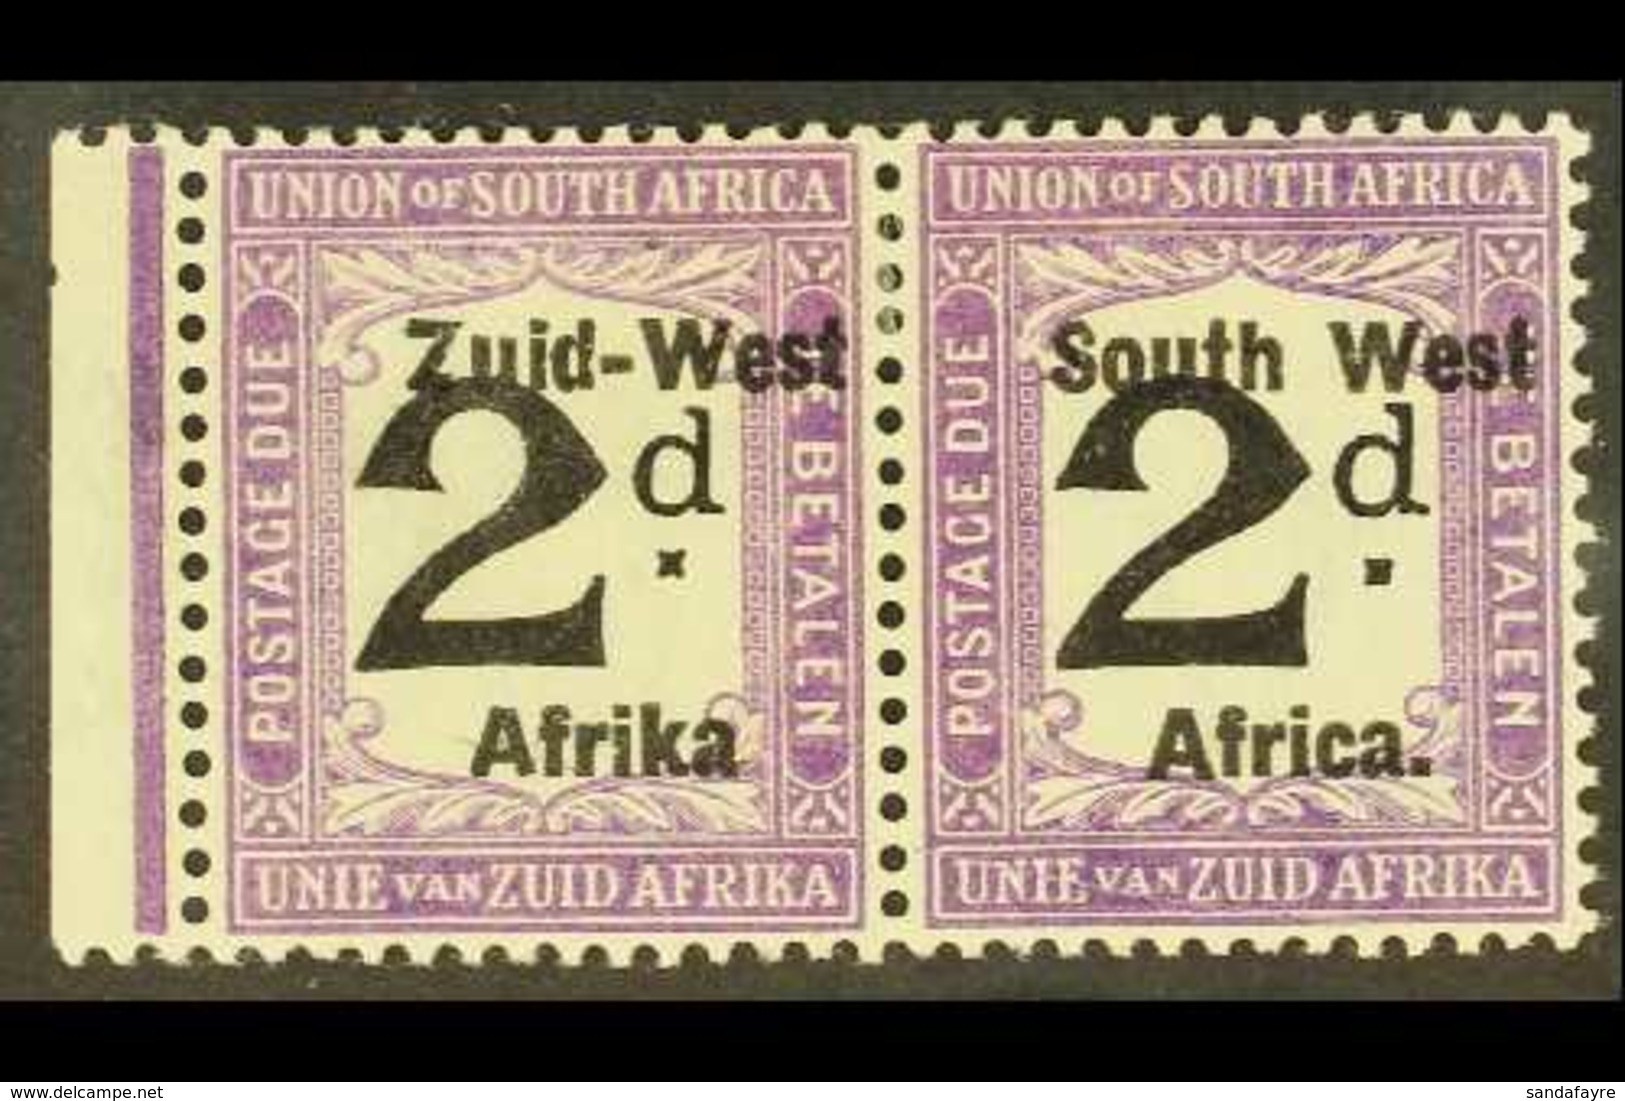 POSTAGE DUES 1923 2d Black & Violet Overprint Setting II 10mm Between Lines Of Overprint With "AFRIKA" WITHOUT STOP Vari - Südwestafrika (1923-1990)